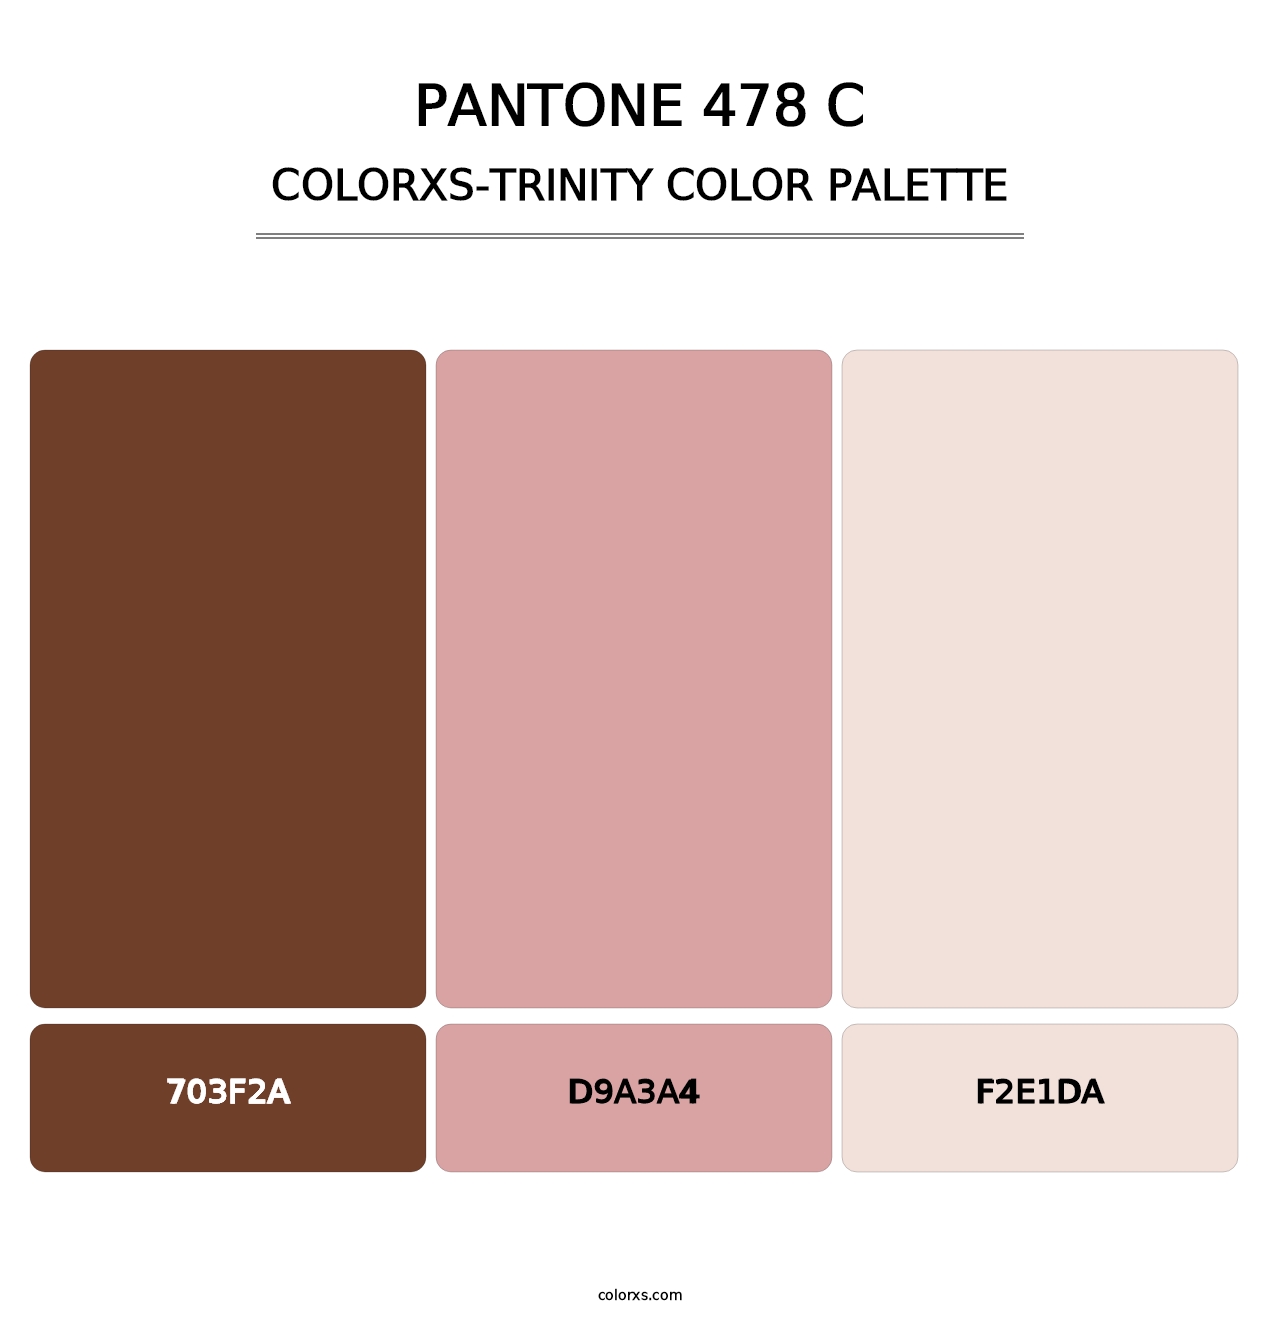 PANTONE 478 C - Colorxs Trinity Palette